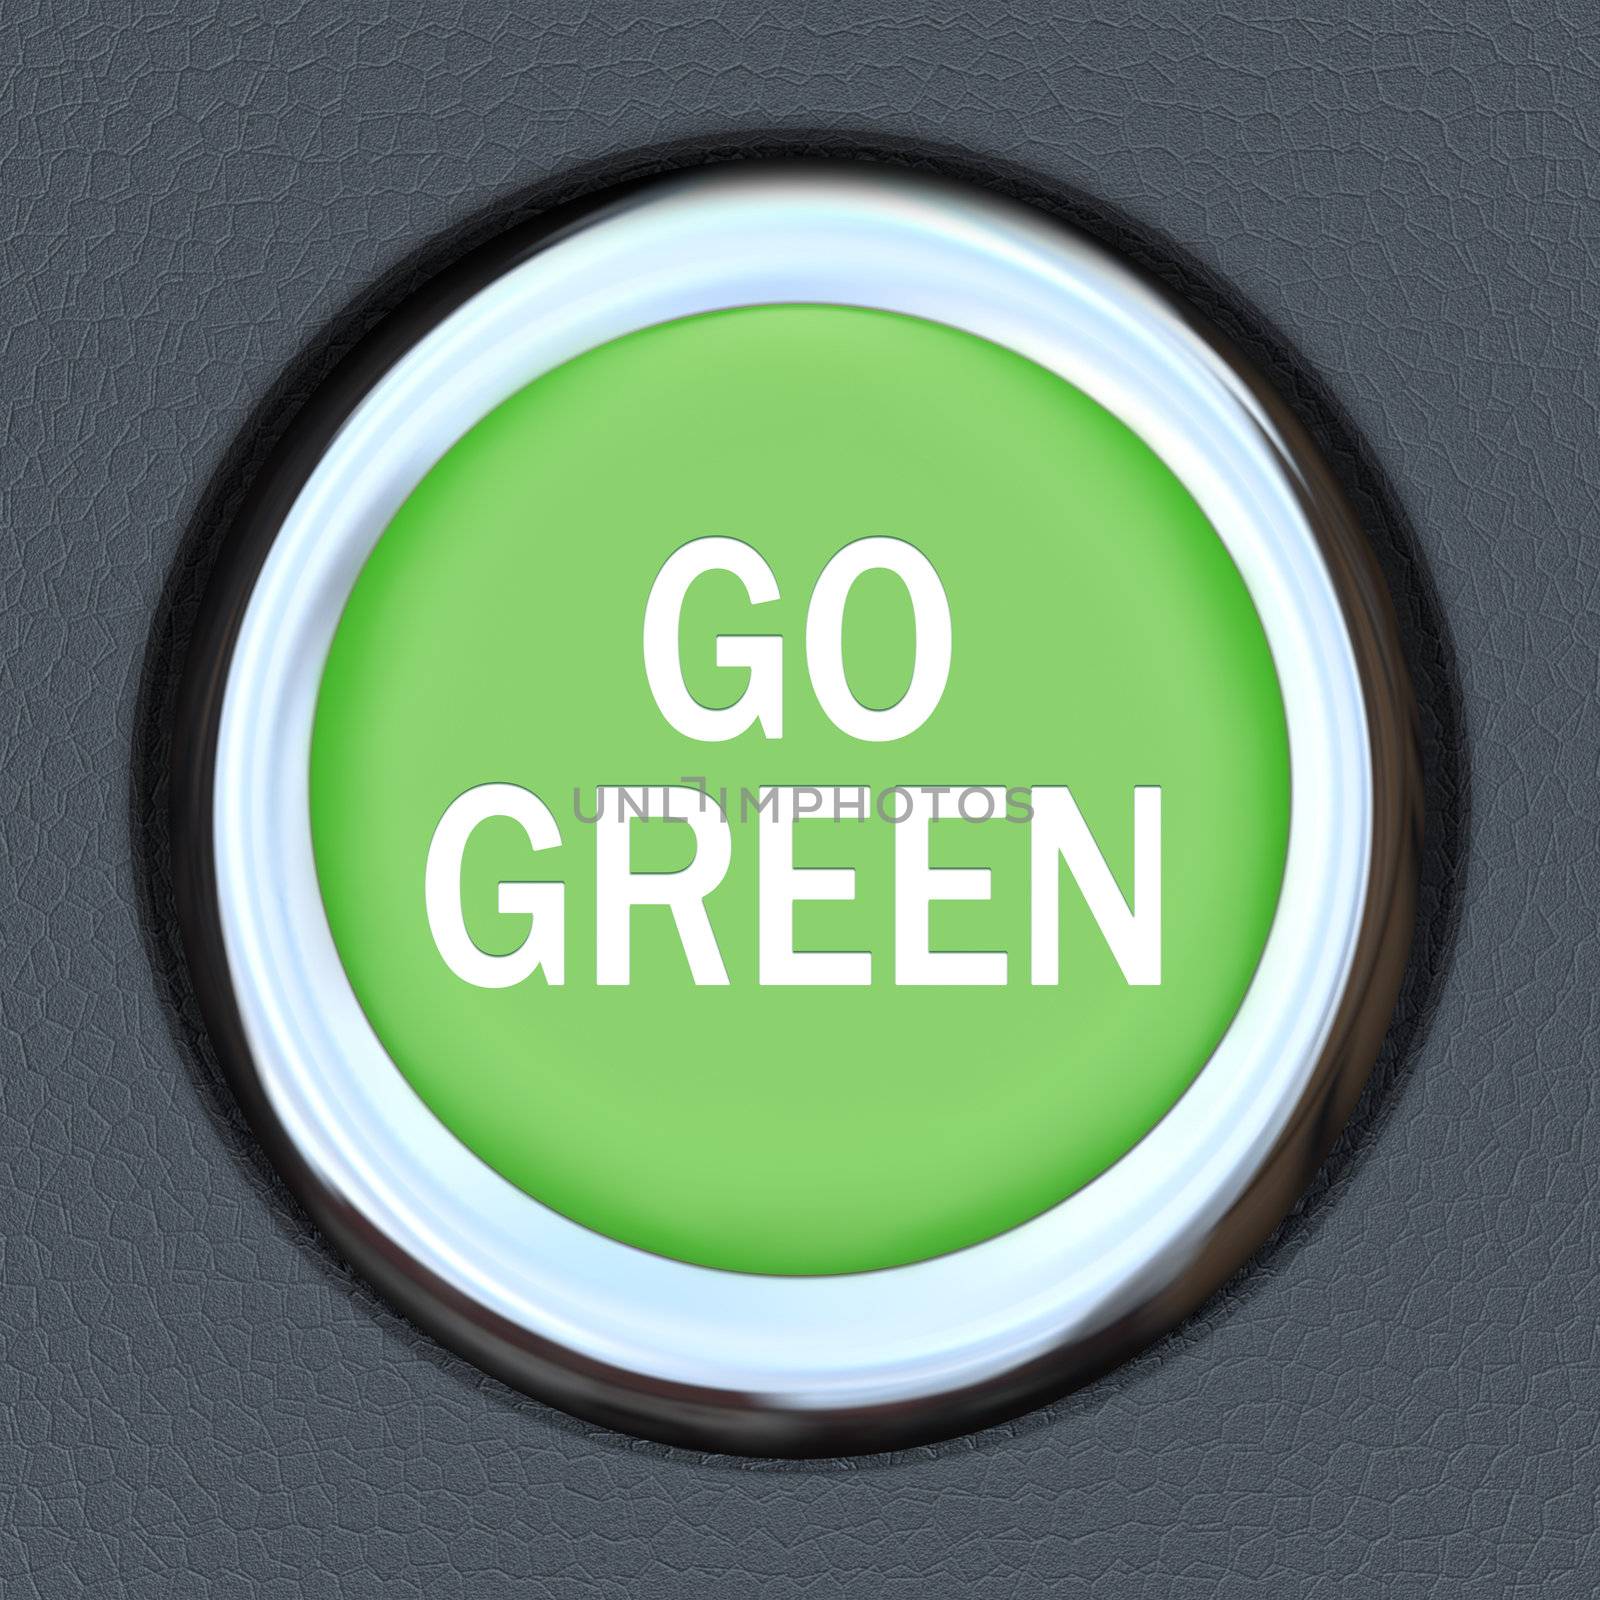 Go Green - Car Push Button Starter Envrionmentalism by iQoncept